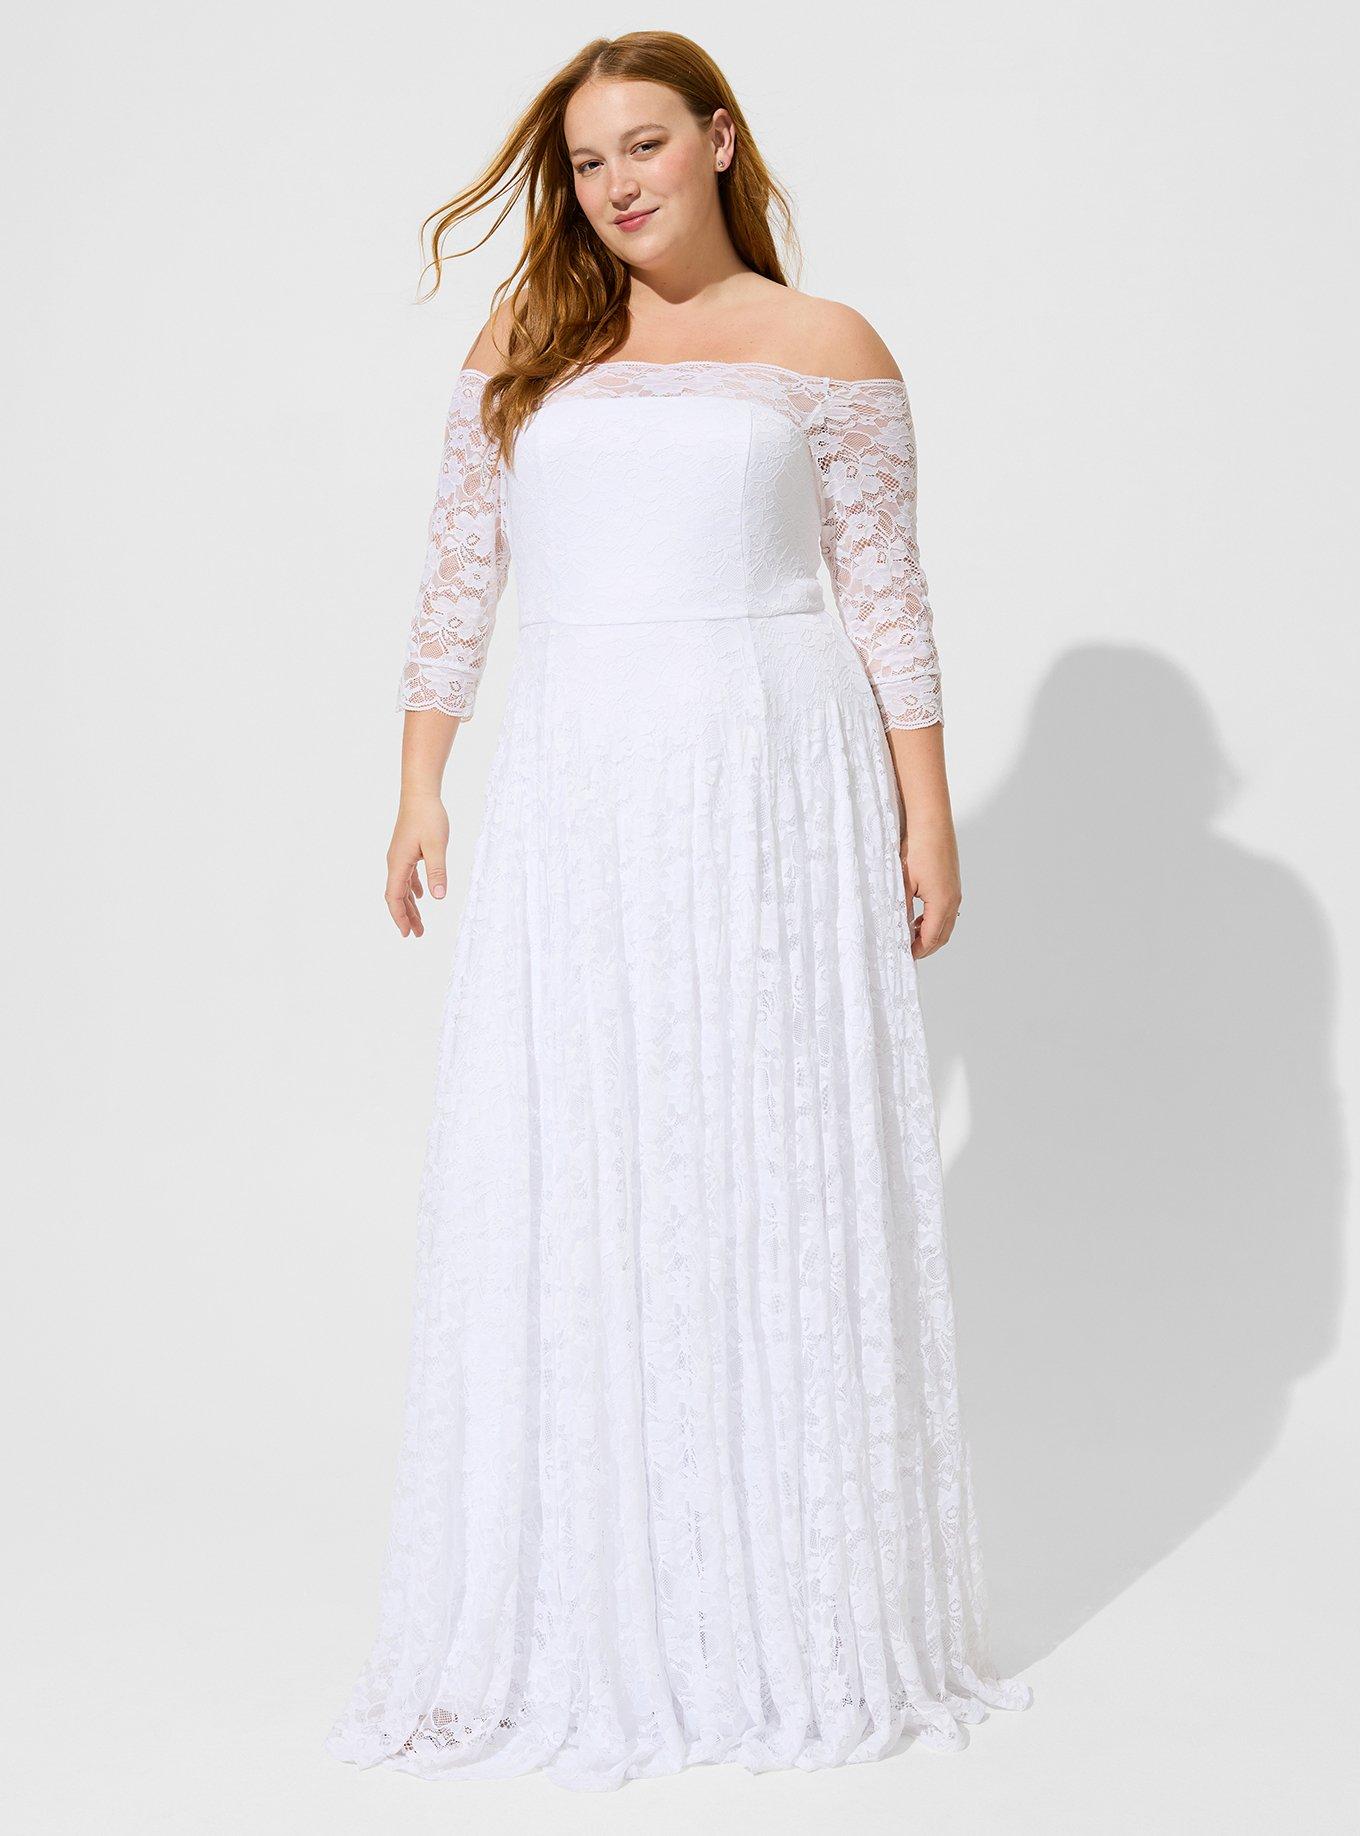 Plus Size - White Off Shoulder Wedding Dress